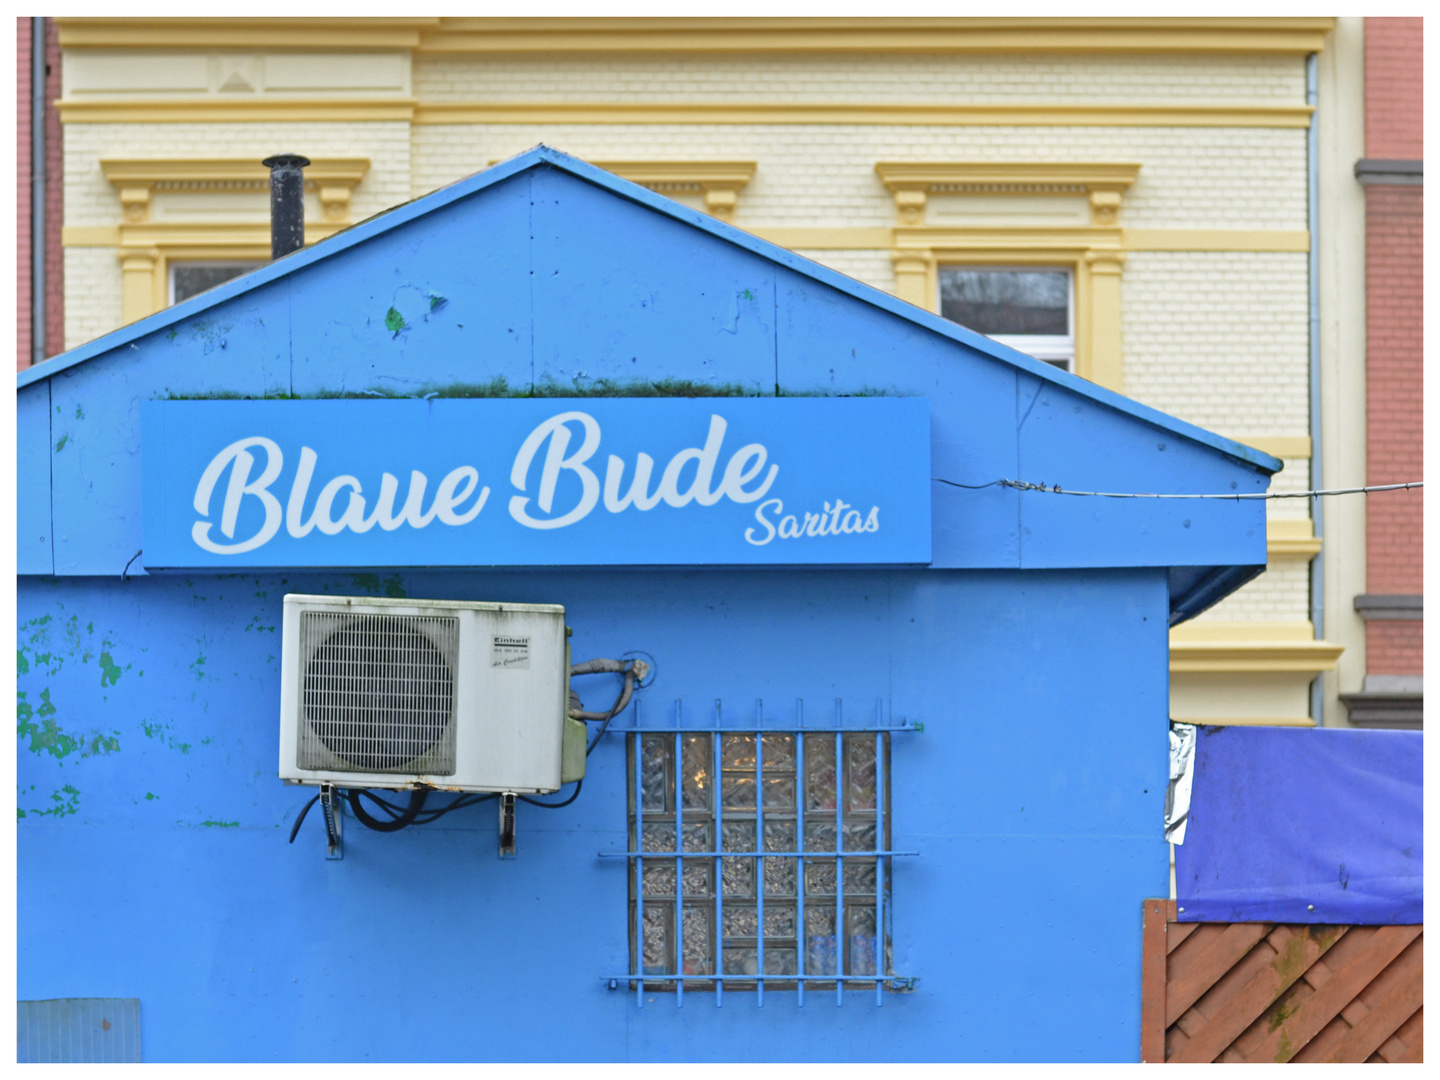 Colours of Duisburg 149 - Blaue Bude